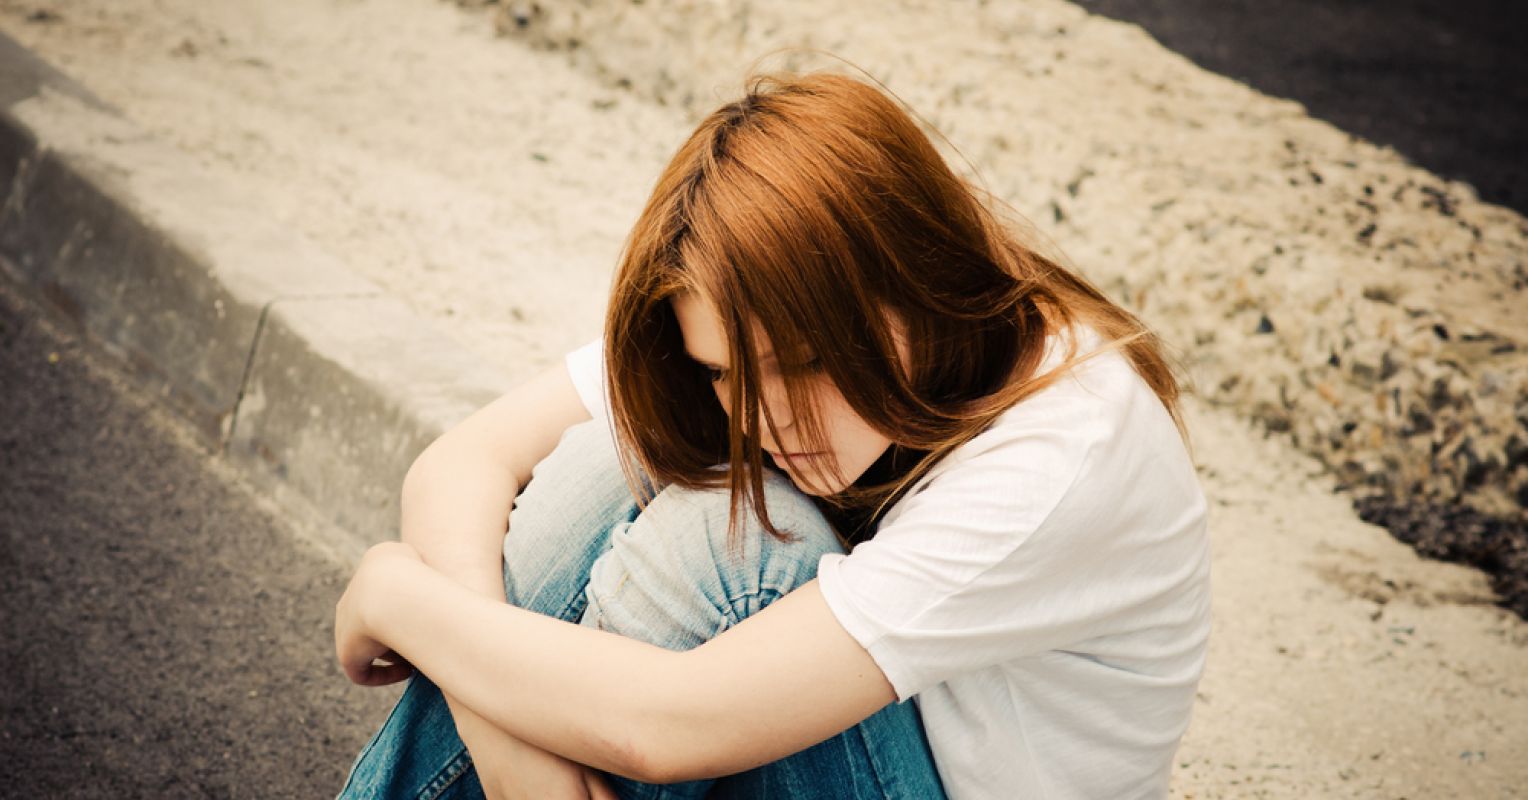 Teen Girls Report Higher Rates of Self-Harm Than Boys